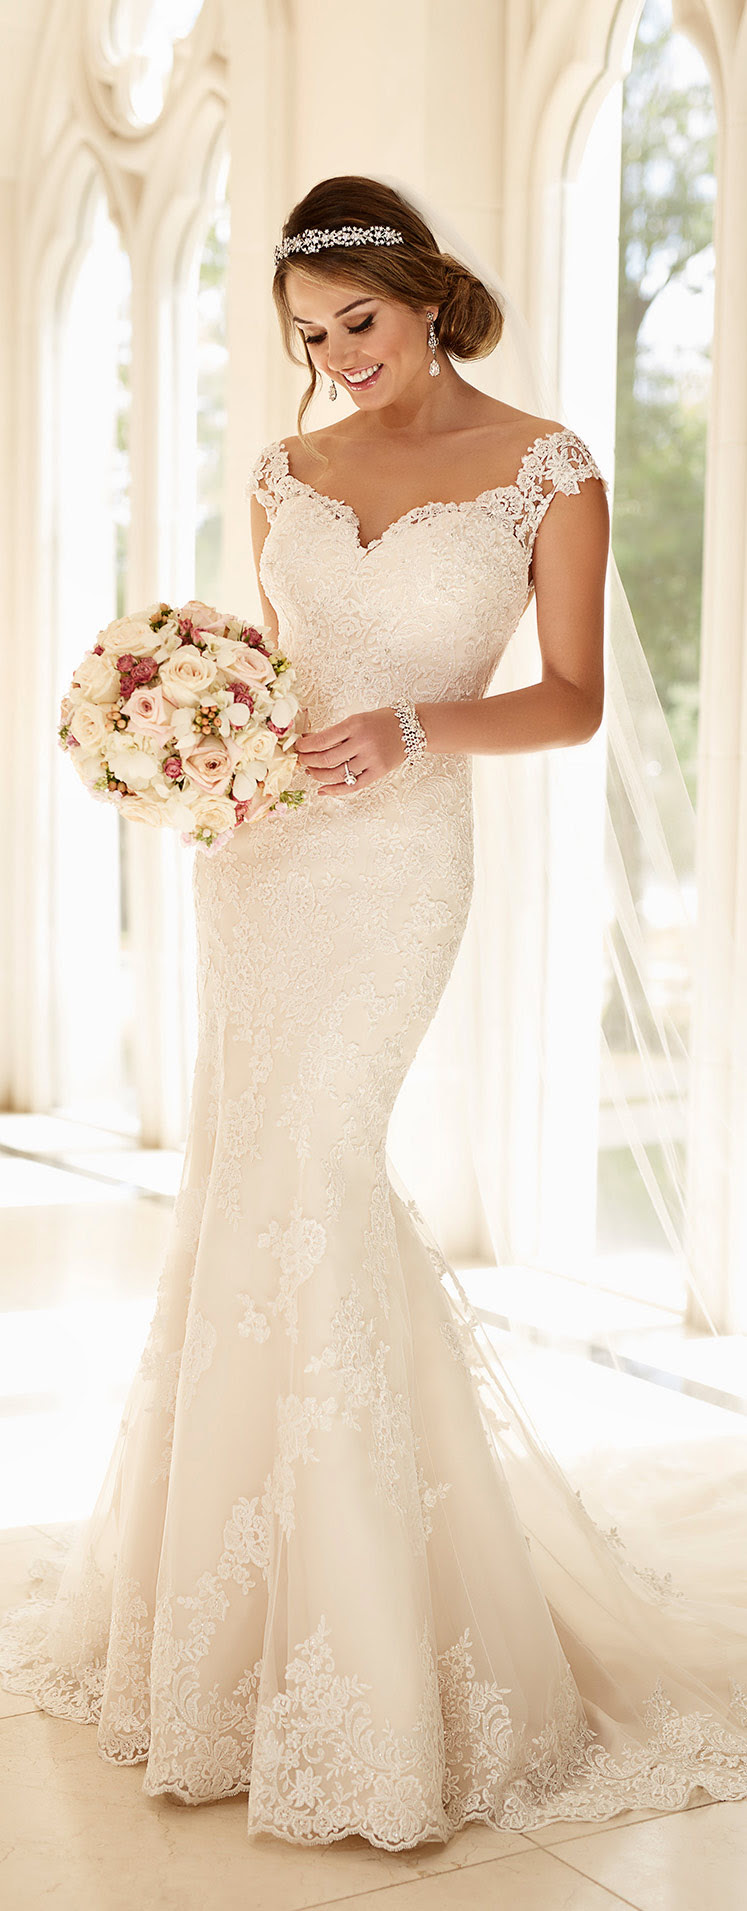 Marina Maitland Wedding Dress Lace Wedding Dresses On Pinterest